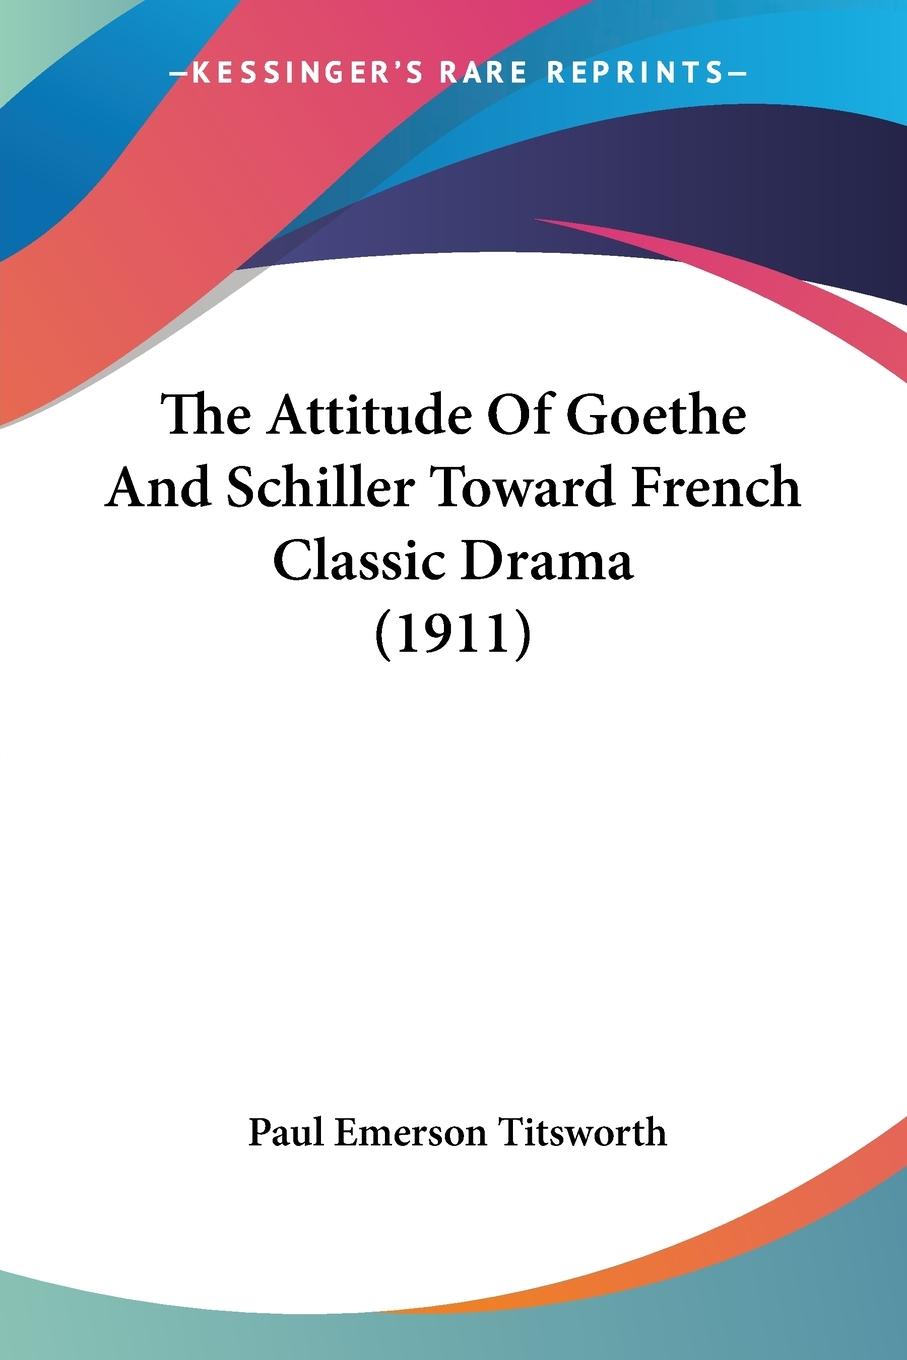 The Attitude Of Goethe And Schiller Toward French Classic Drama (1911) - Titsworth, Paul Emerson